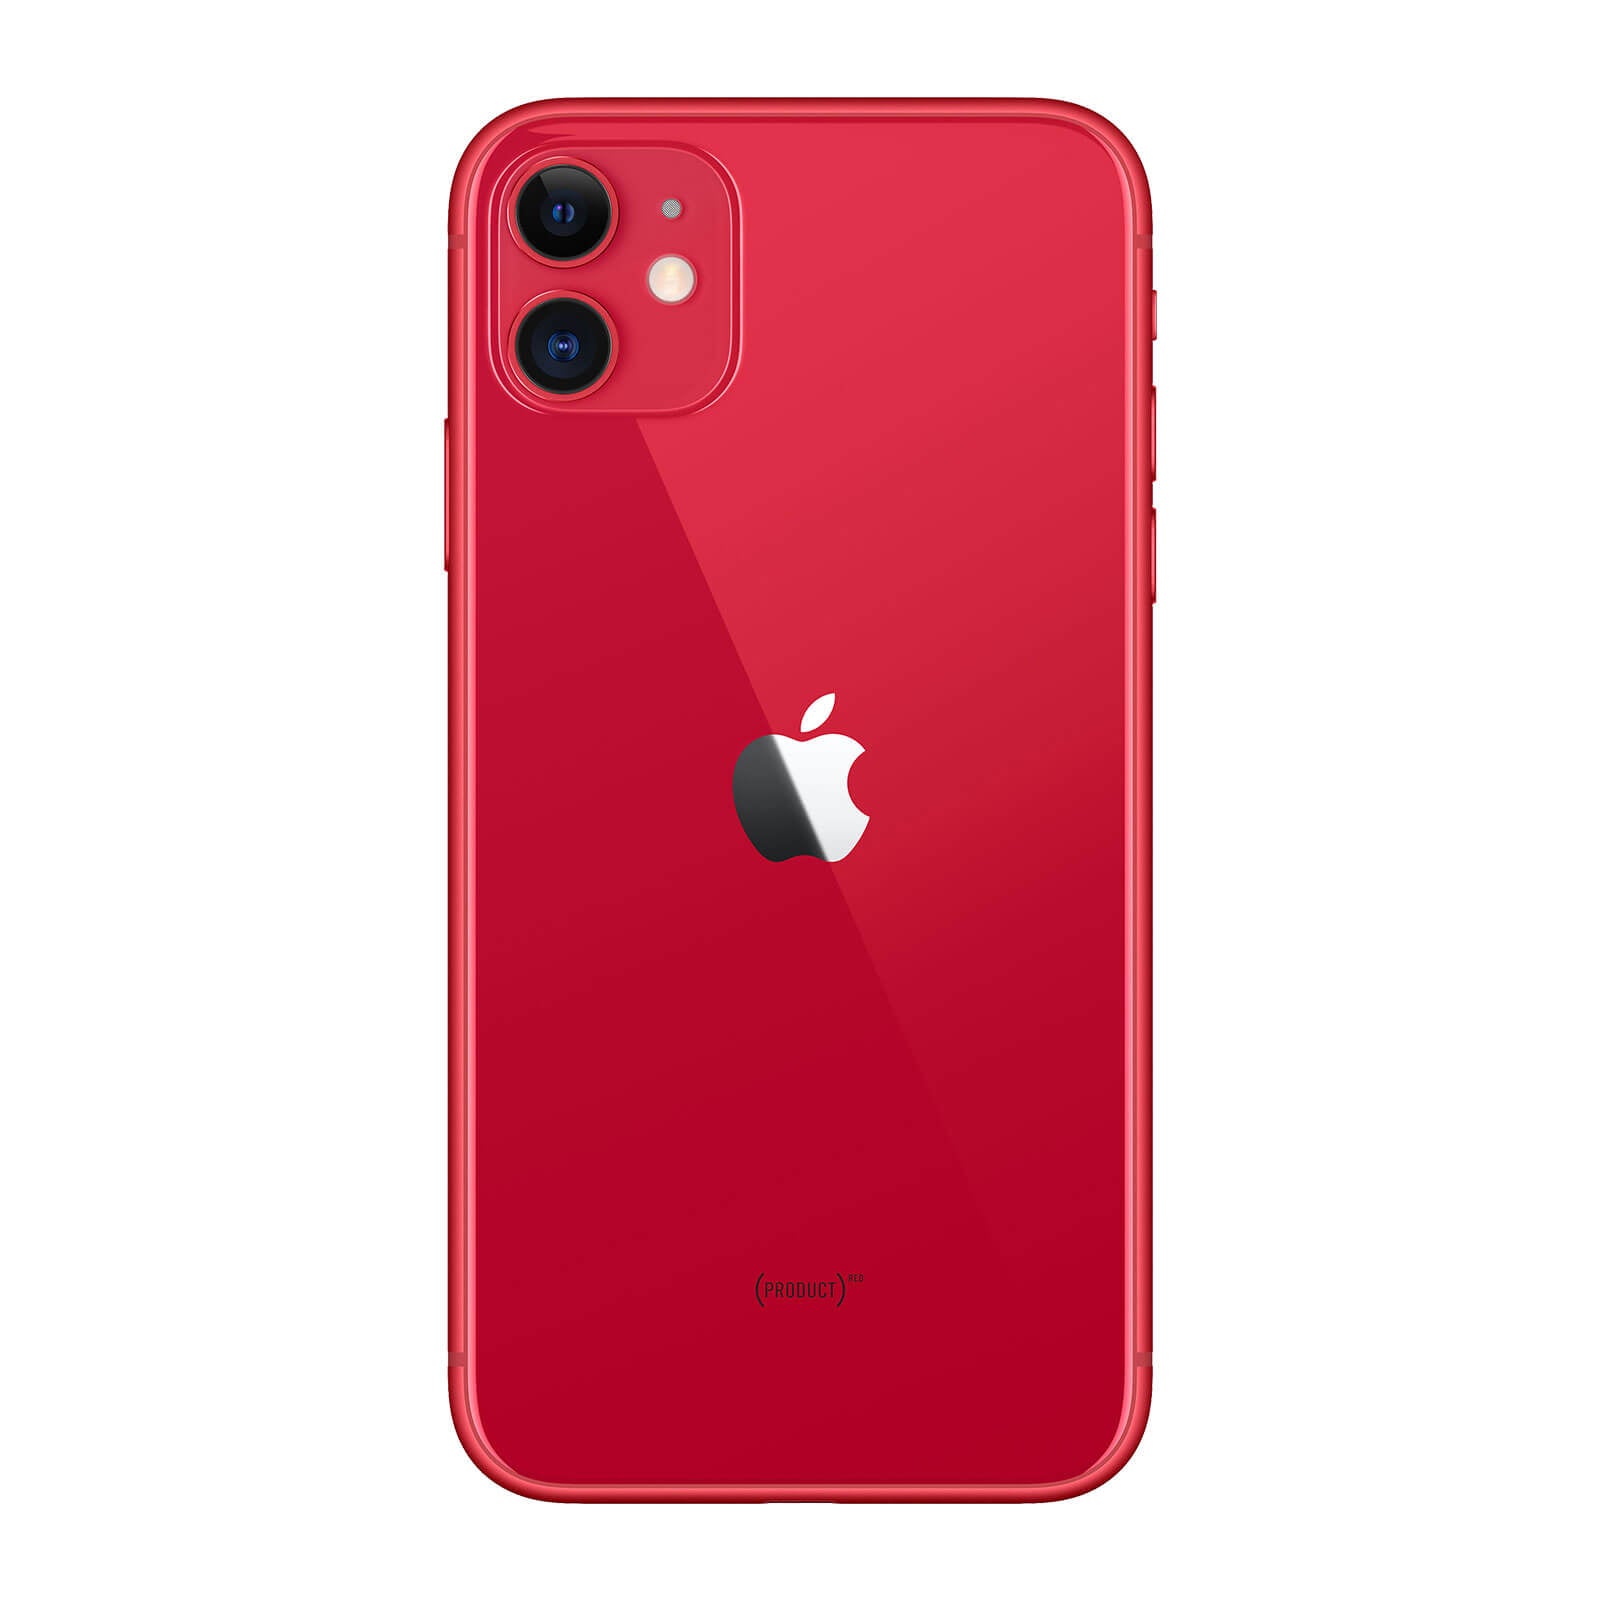 Apple iPhone 11 128GB Product Red Fair - Unlocked